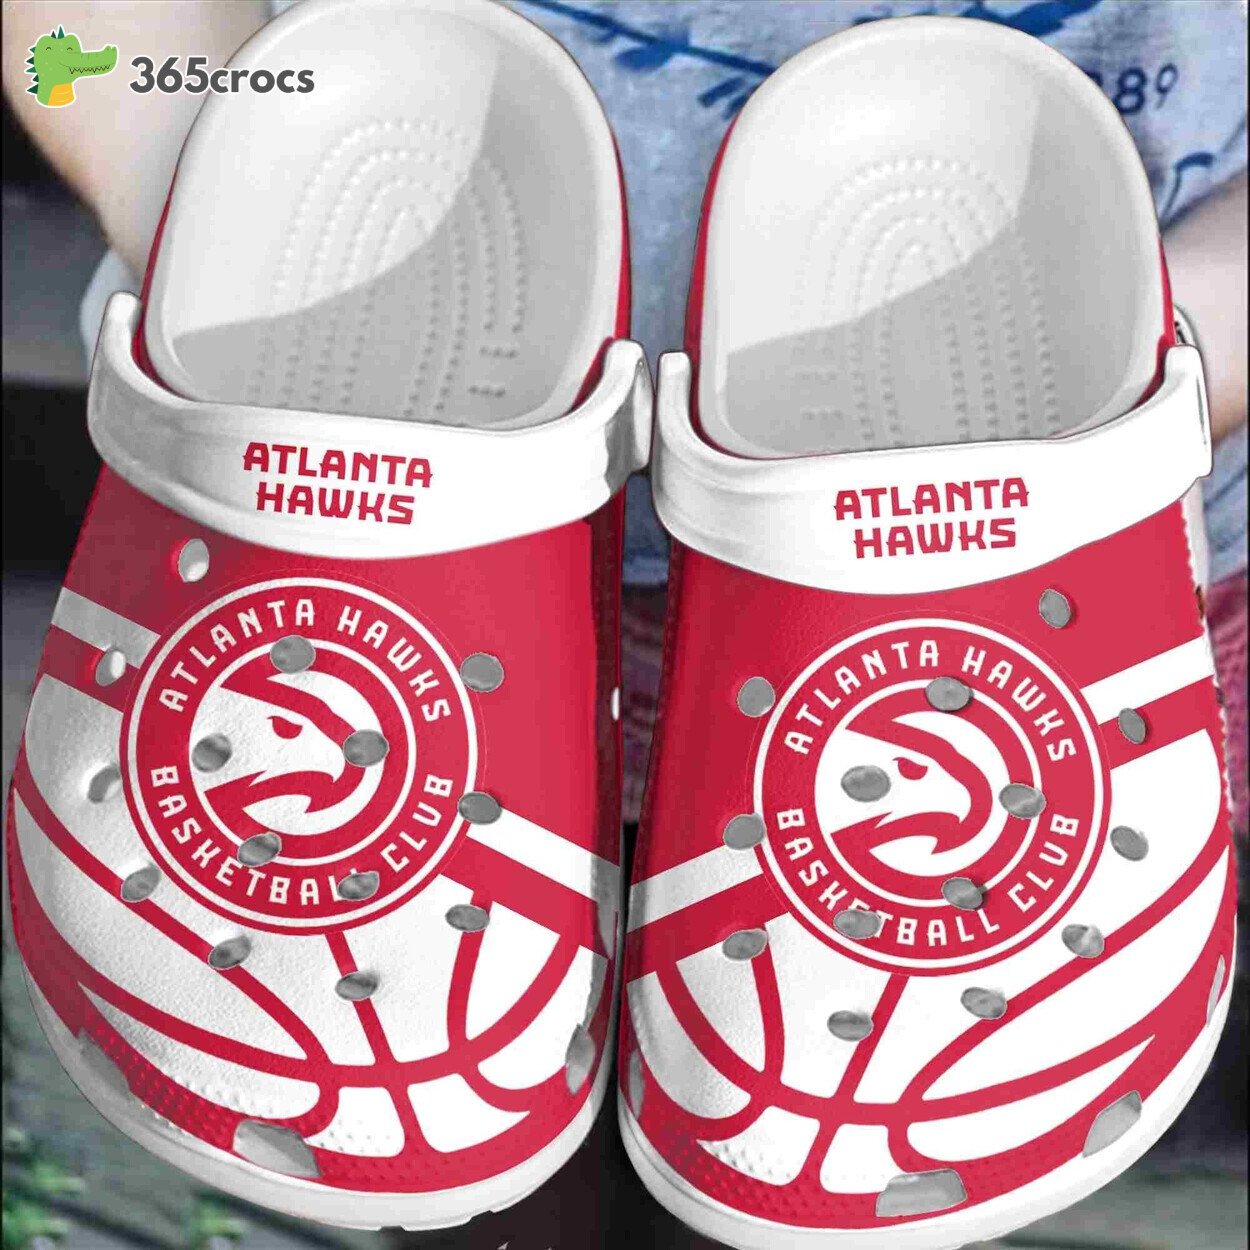 Atlanta Hawks Basketball Club Crocss Clogs Comfortable Shoes